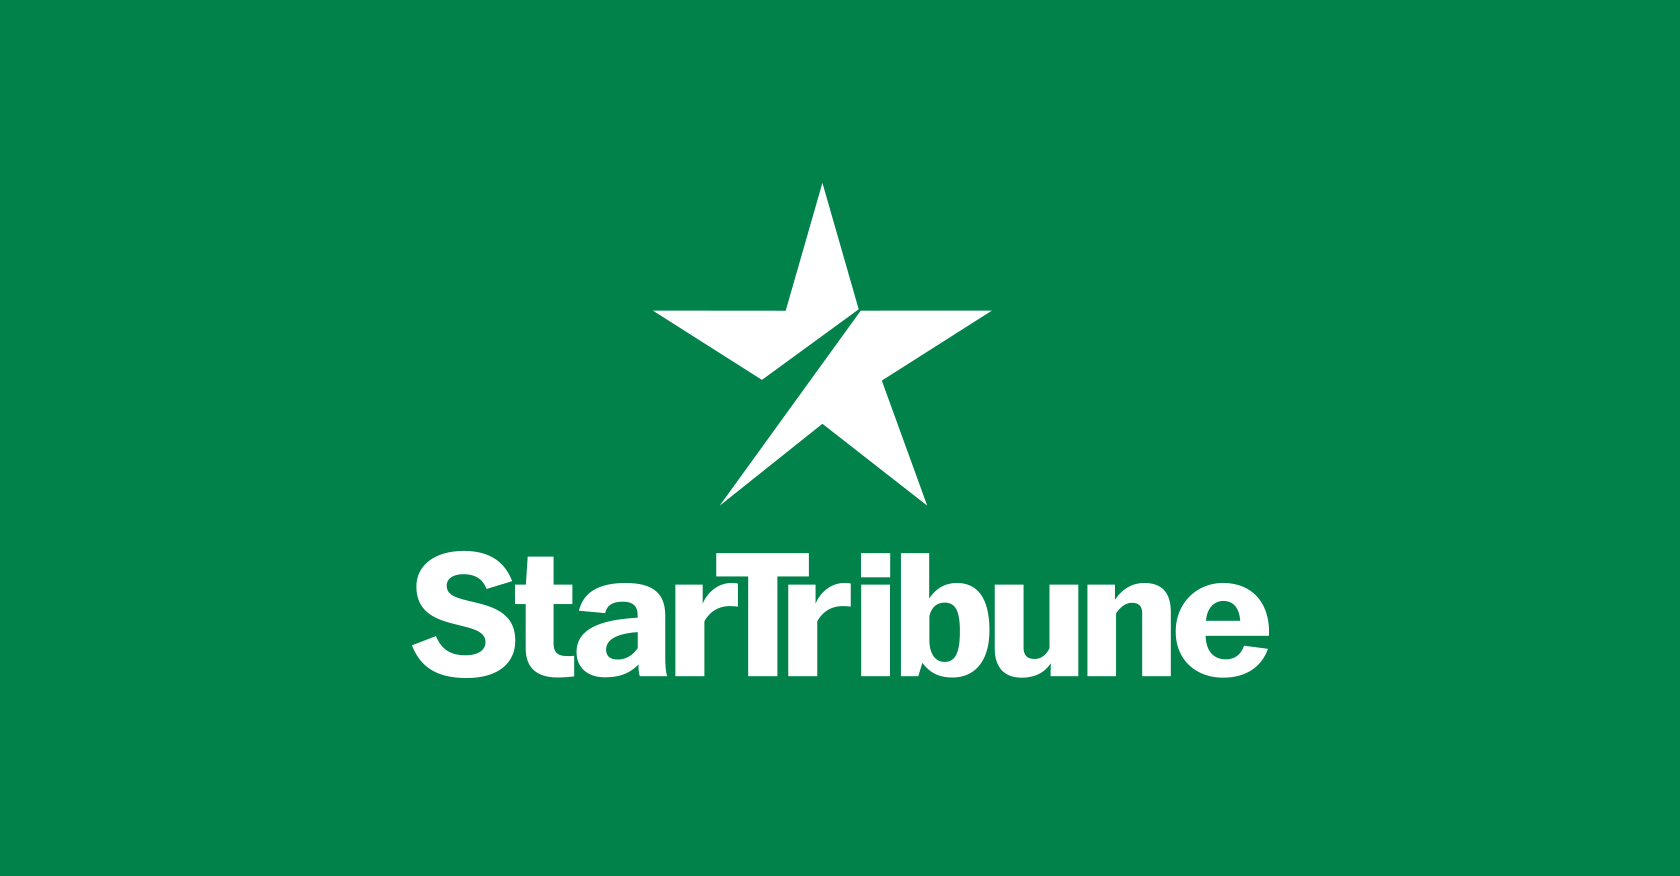 Key Wisconsin Republican says protecting insurance priority - Minneapolis Star Tribune